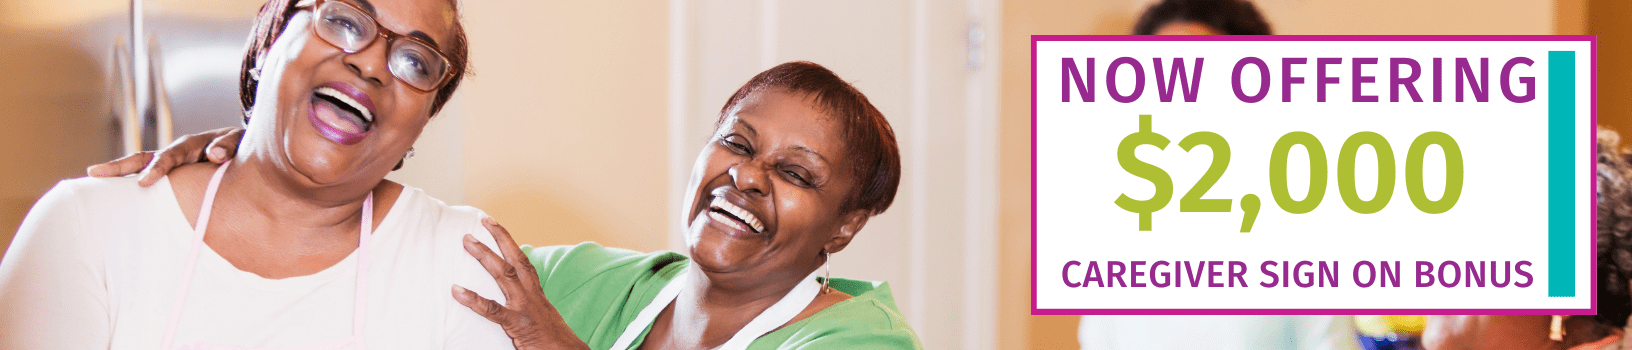 Caregivers laughing. Now Offering $2,000 Caregiver sign-on bonus.